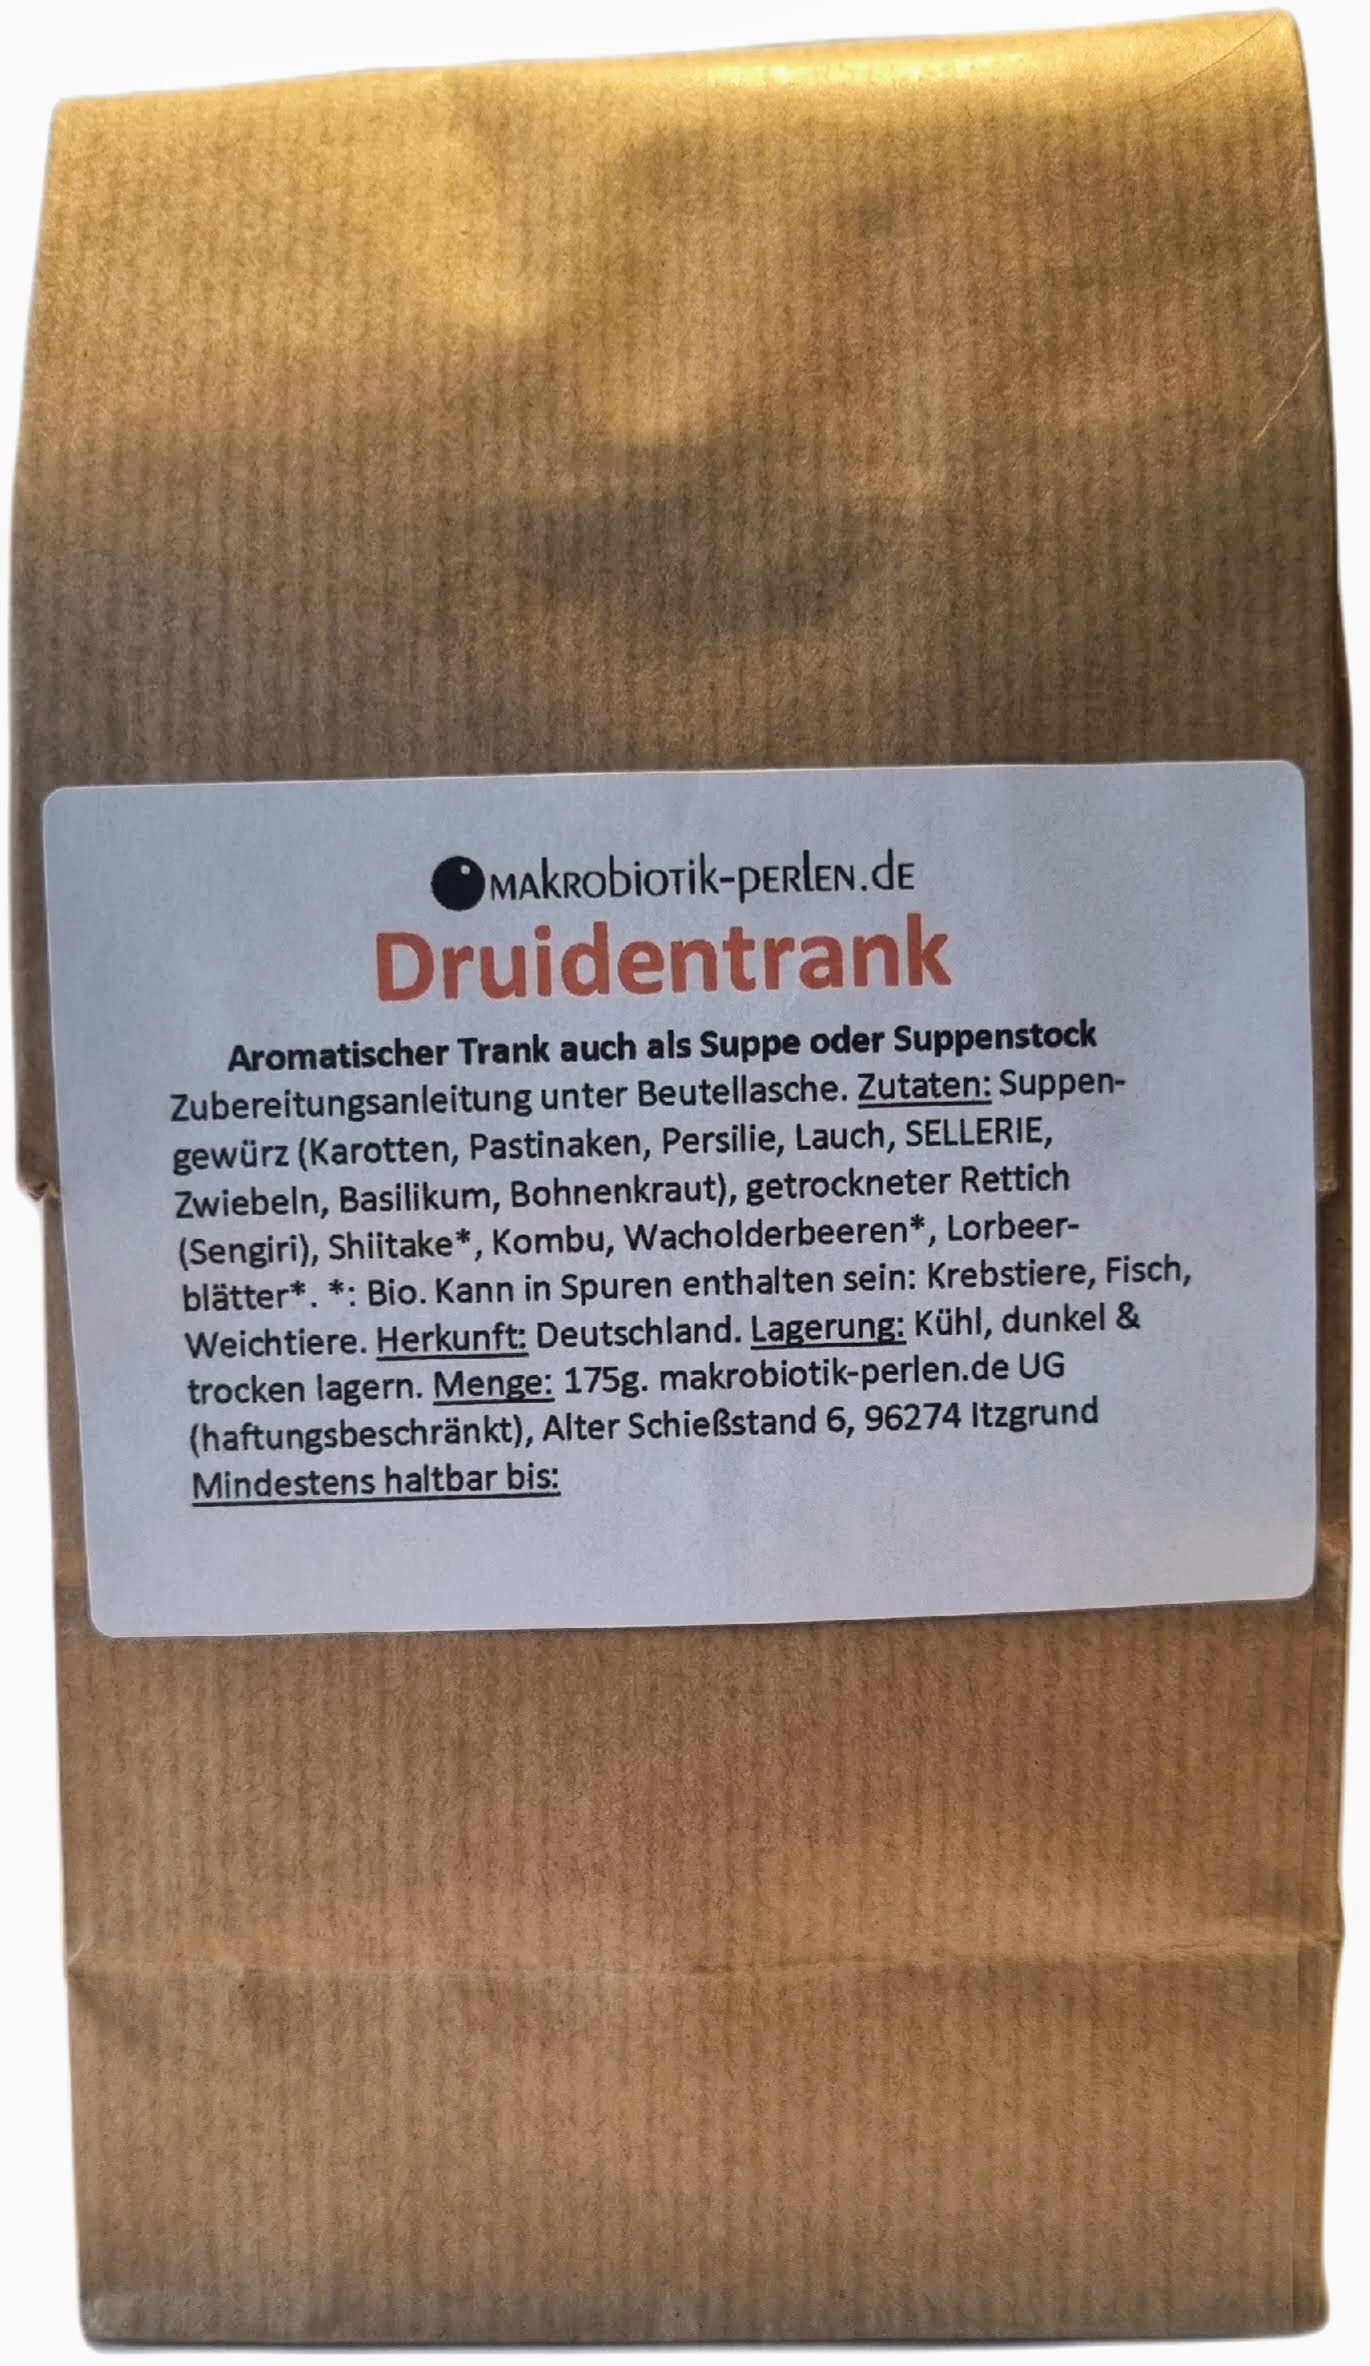 Druidentrank (aromatische Suppe, Suppenstock)